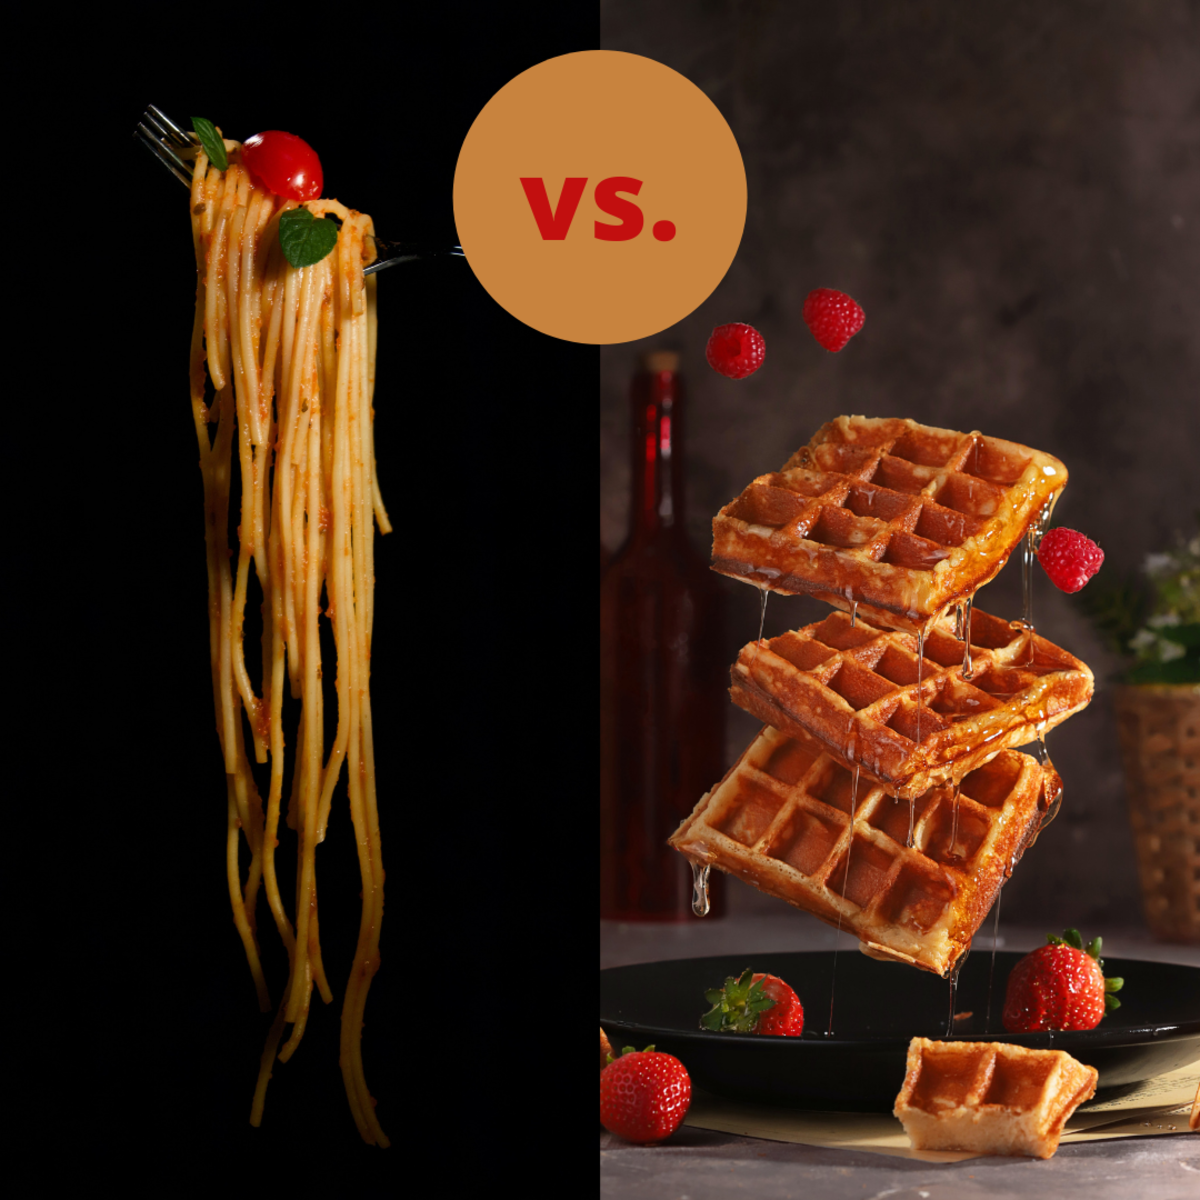 An examination of gender communication through the "spaghetti vs. waffle" analogy.